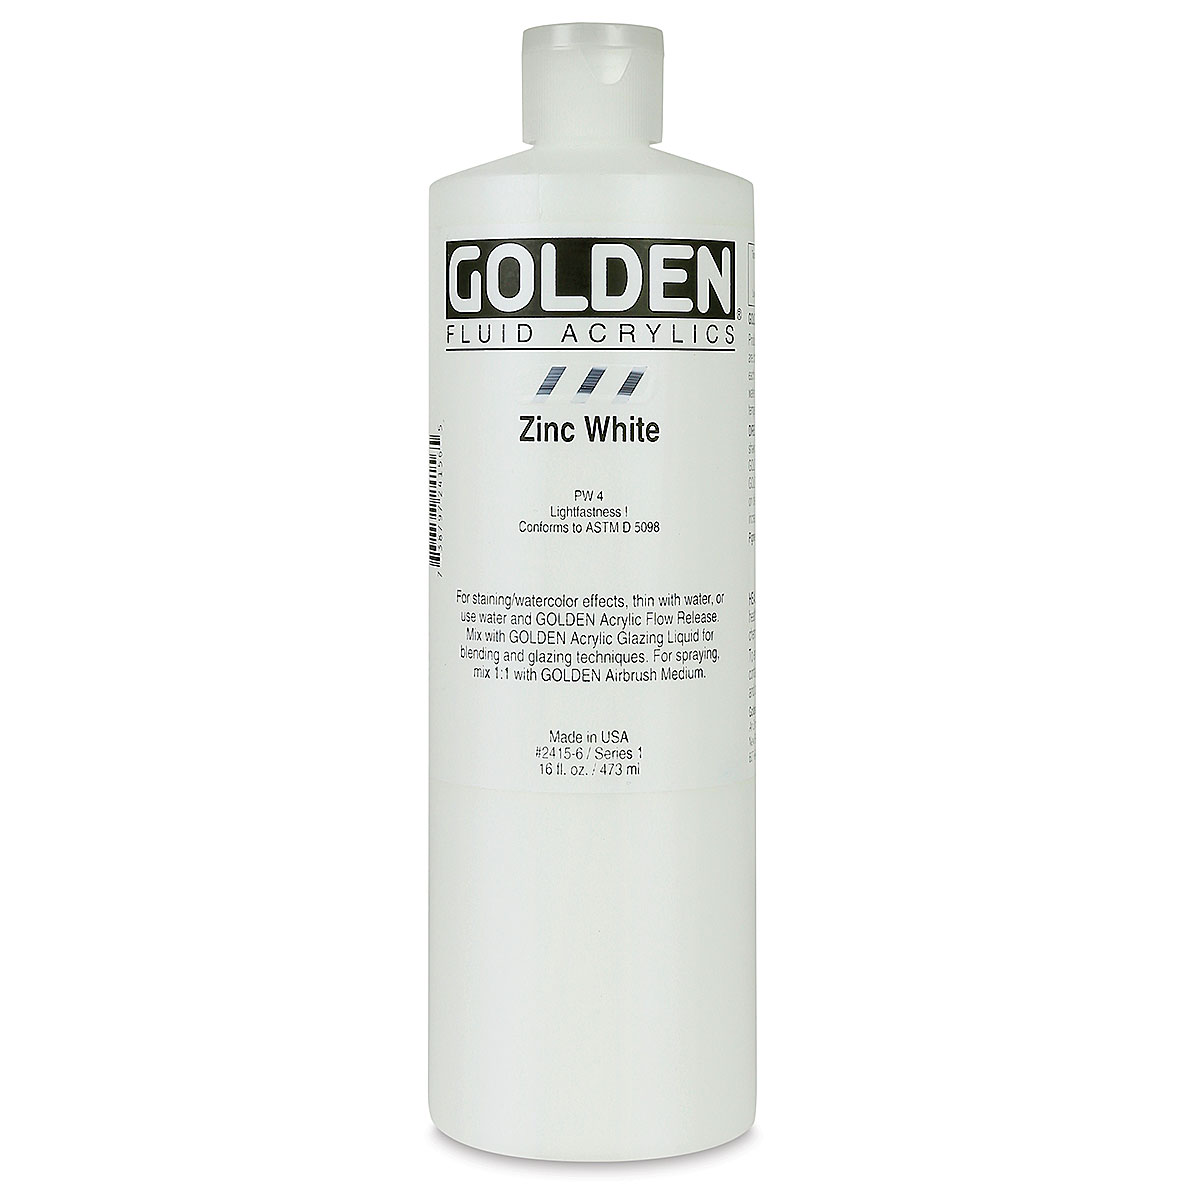 Golden Fluid Acrylics - Cadmium Yellow Medium Hue, 16 oz bottle